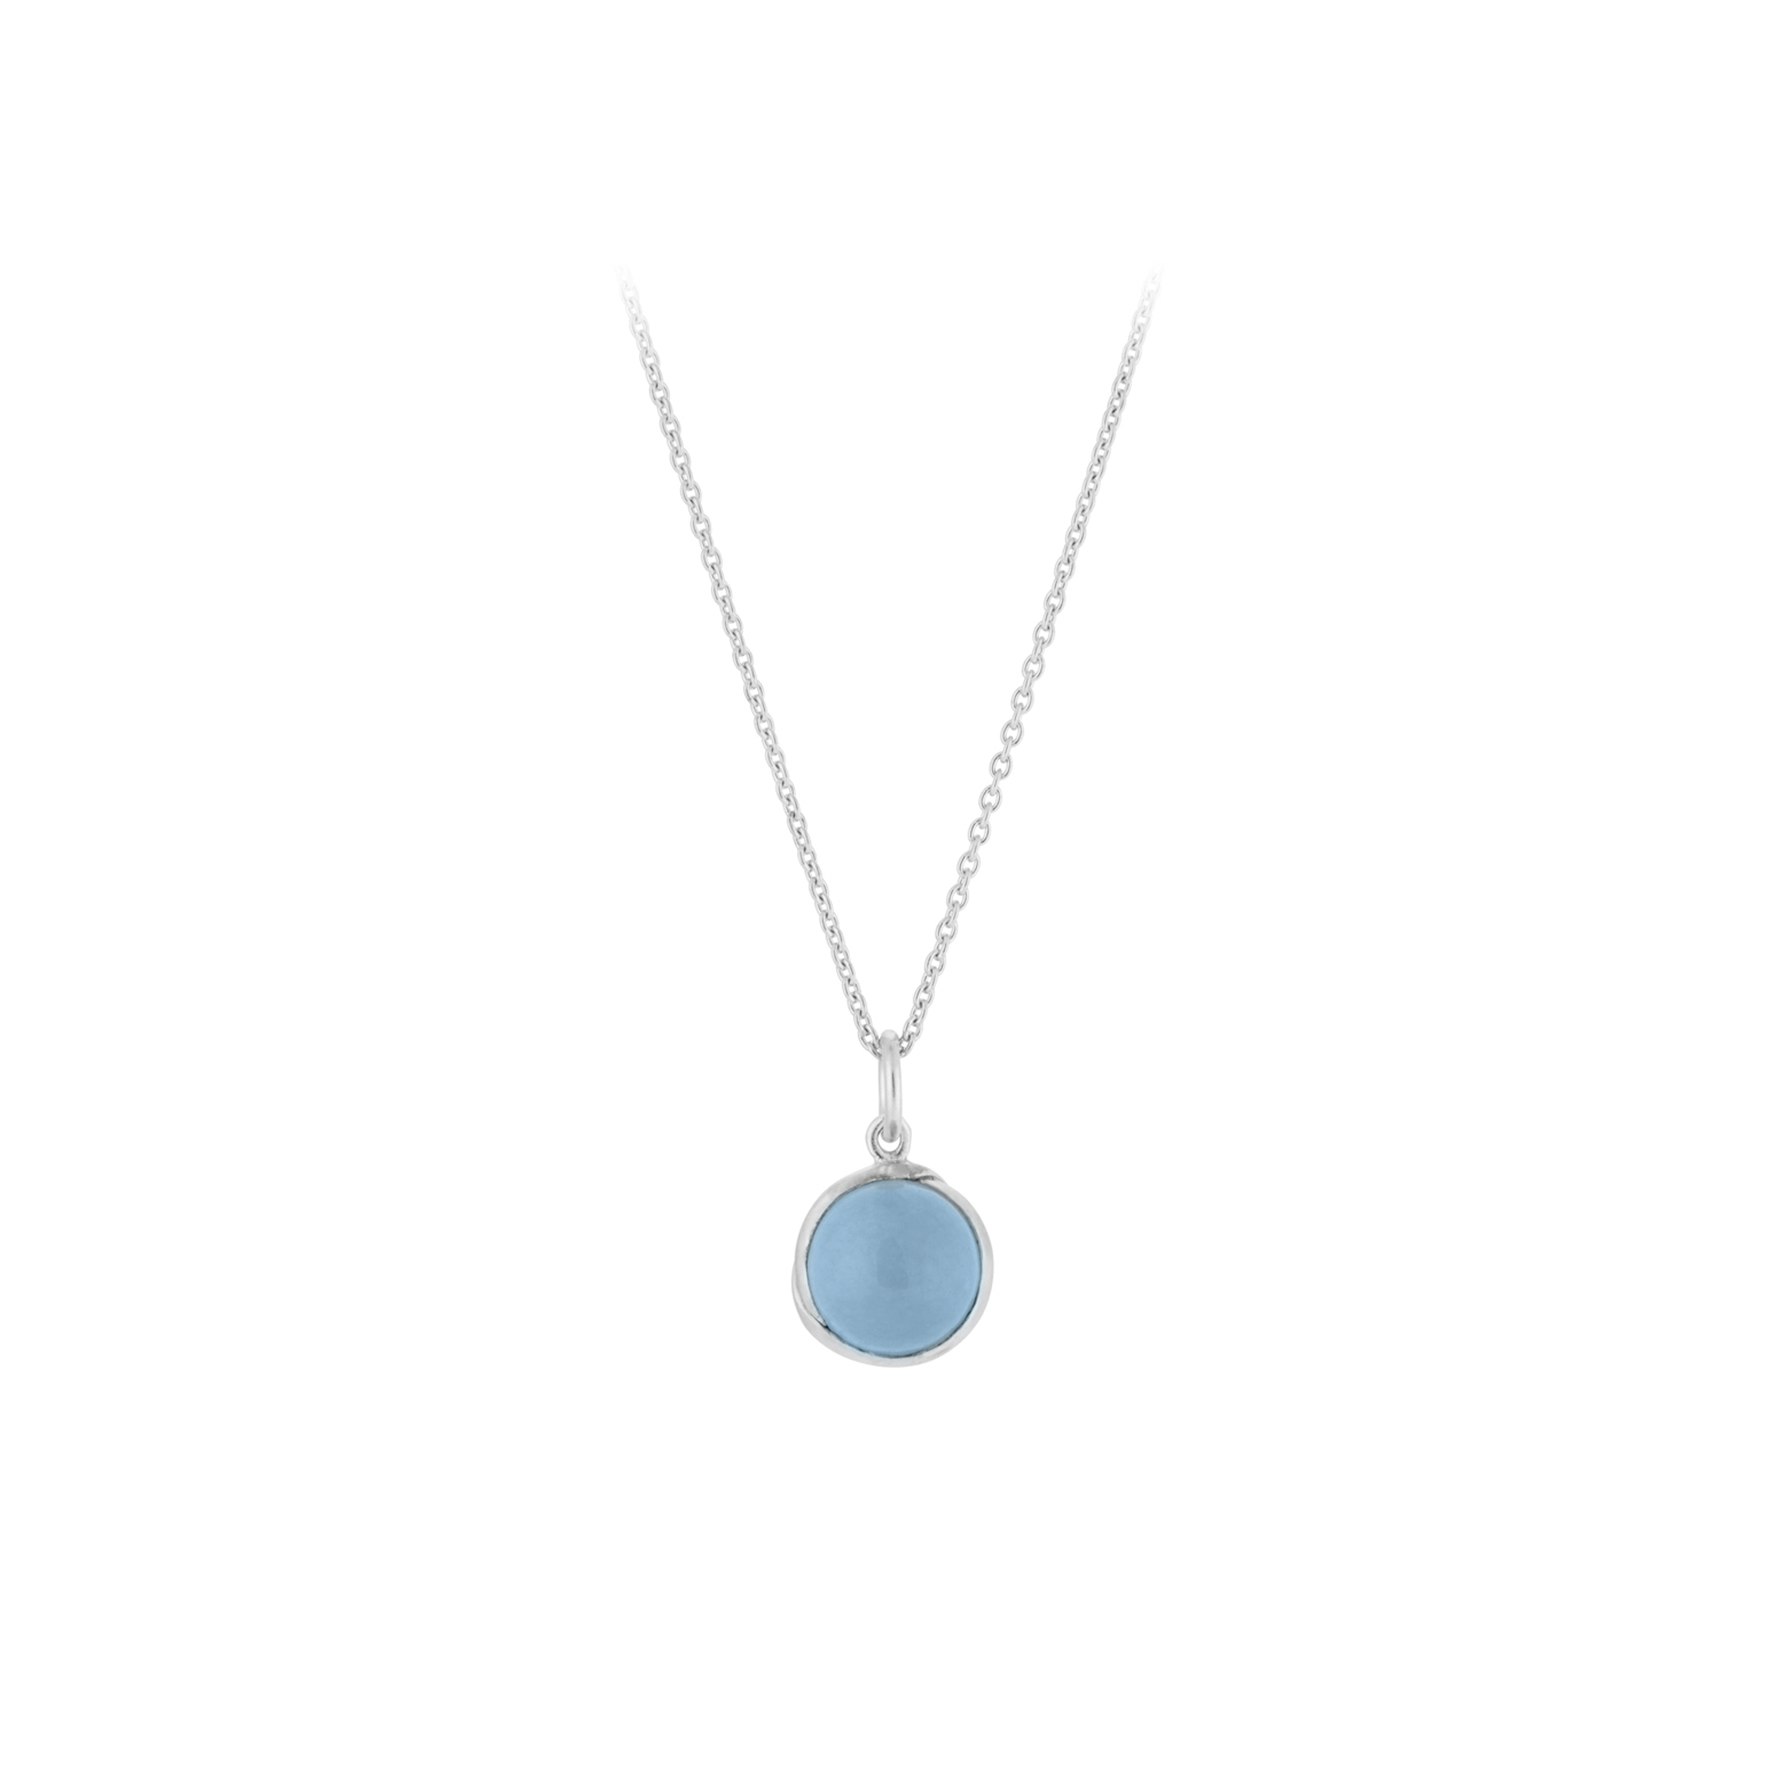 Aura Blue Necklace fra Pernille Corydon i Sølv Sterling 925